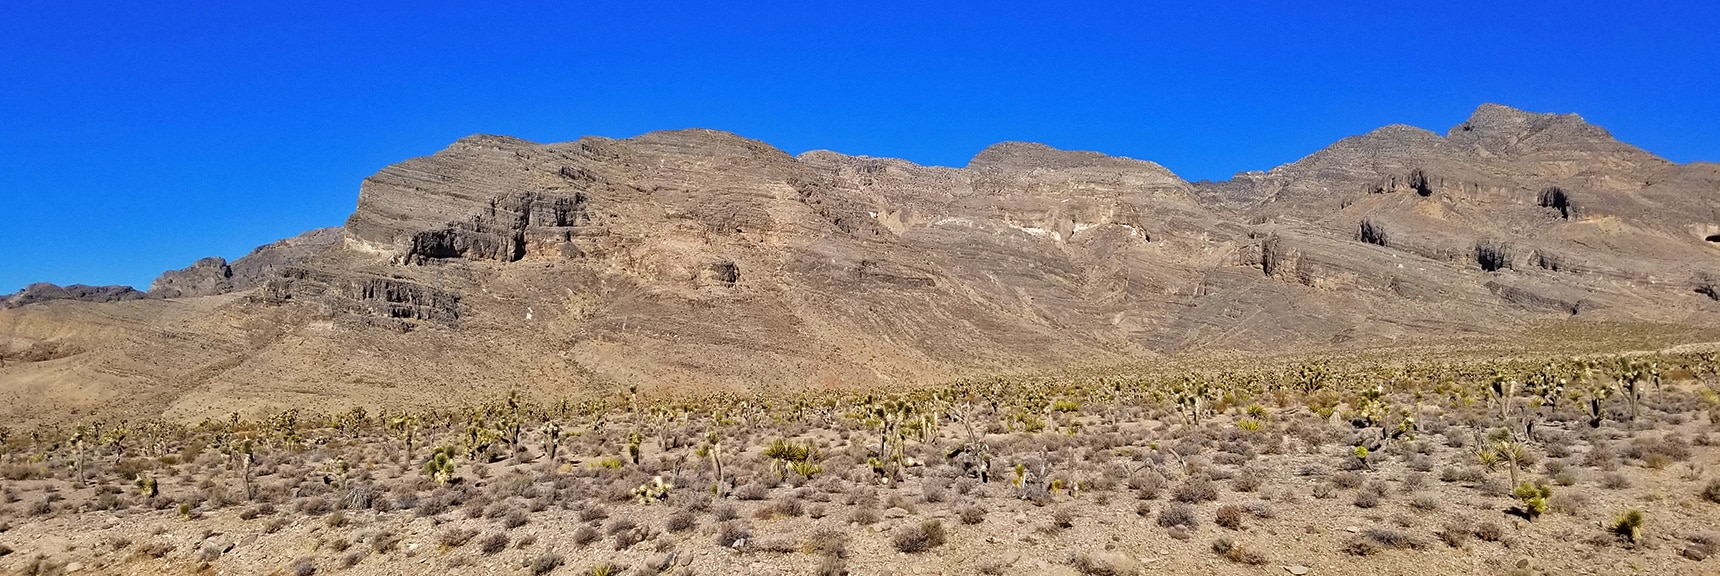 Southern Sheep Range Viewed from Mormon Well Road | Lower Mormon Well Road | Sheep Range, Desert National Wildlife Refuge, Nevada